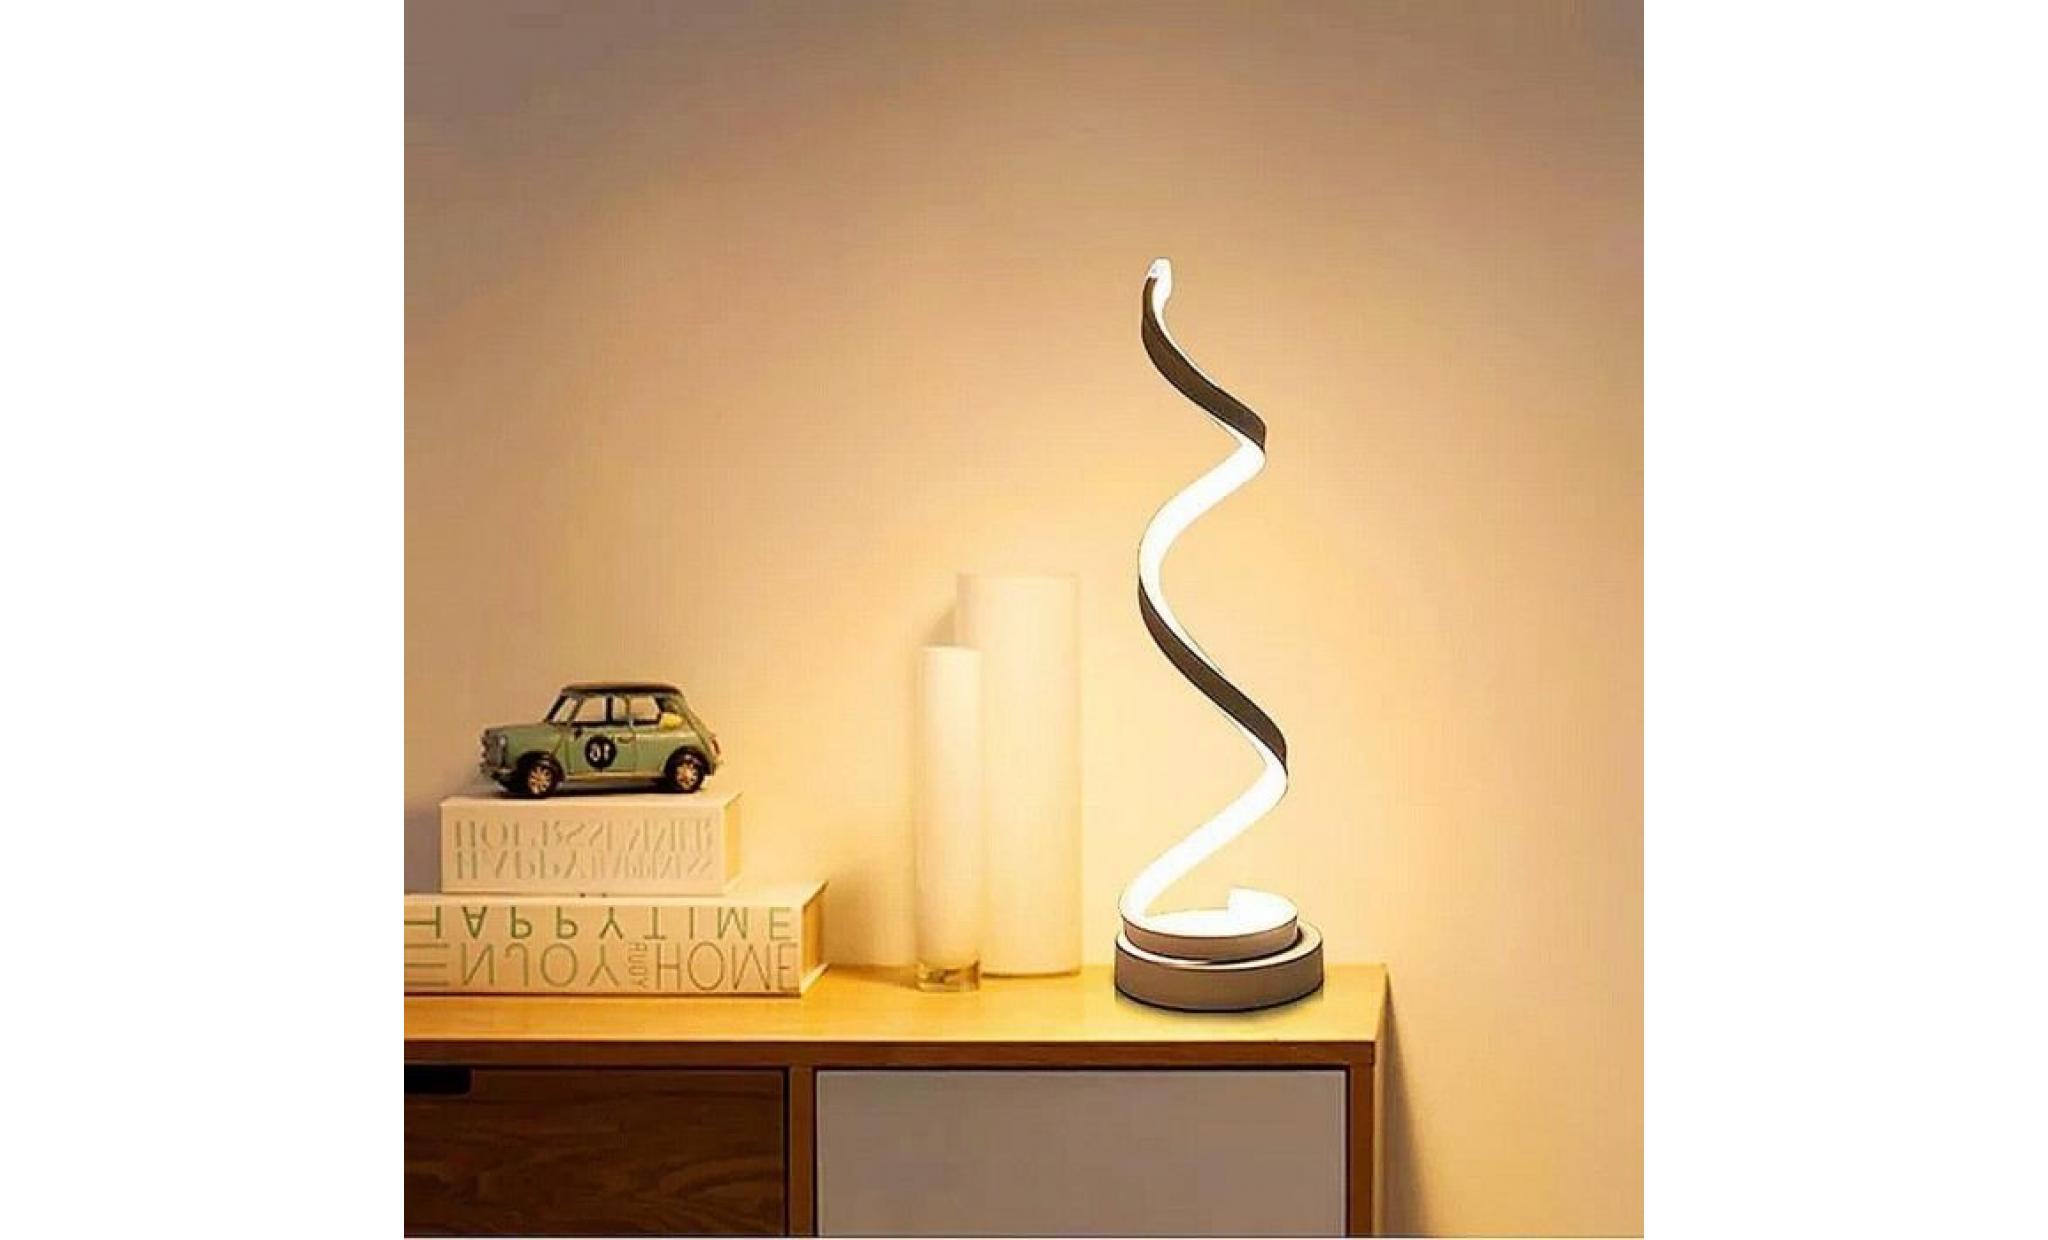 elinkume spirale led lampe de bureau 12w blanc chaud dimming incurvée lampe de table led design minimaliste  creative acrylique